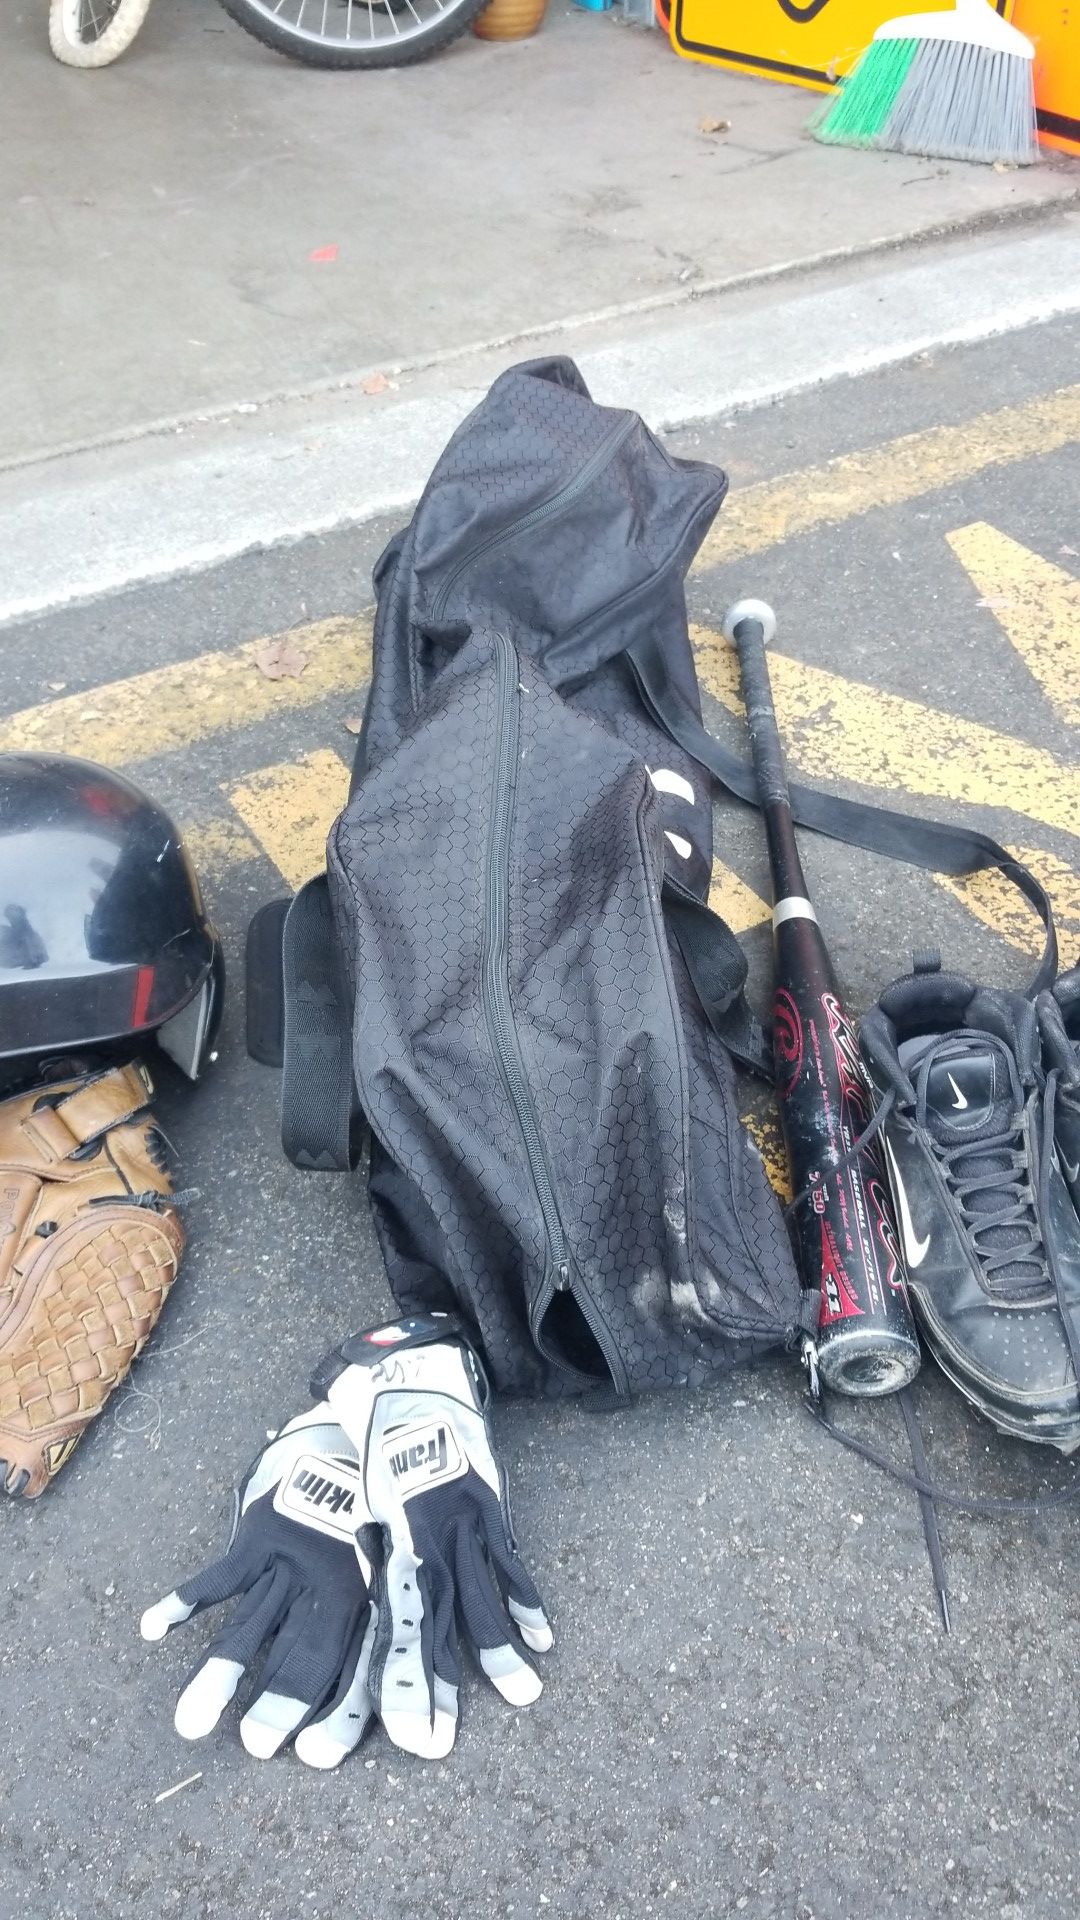 Under armor baseball bag and miscellaneous baseball gear